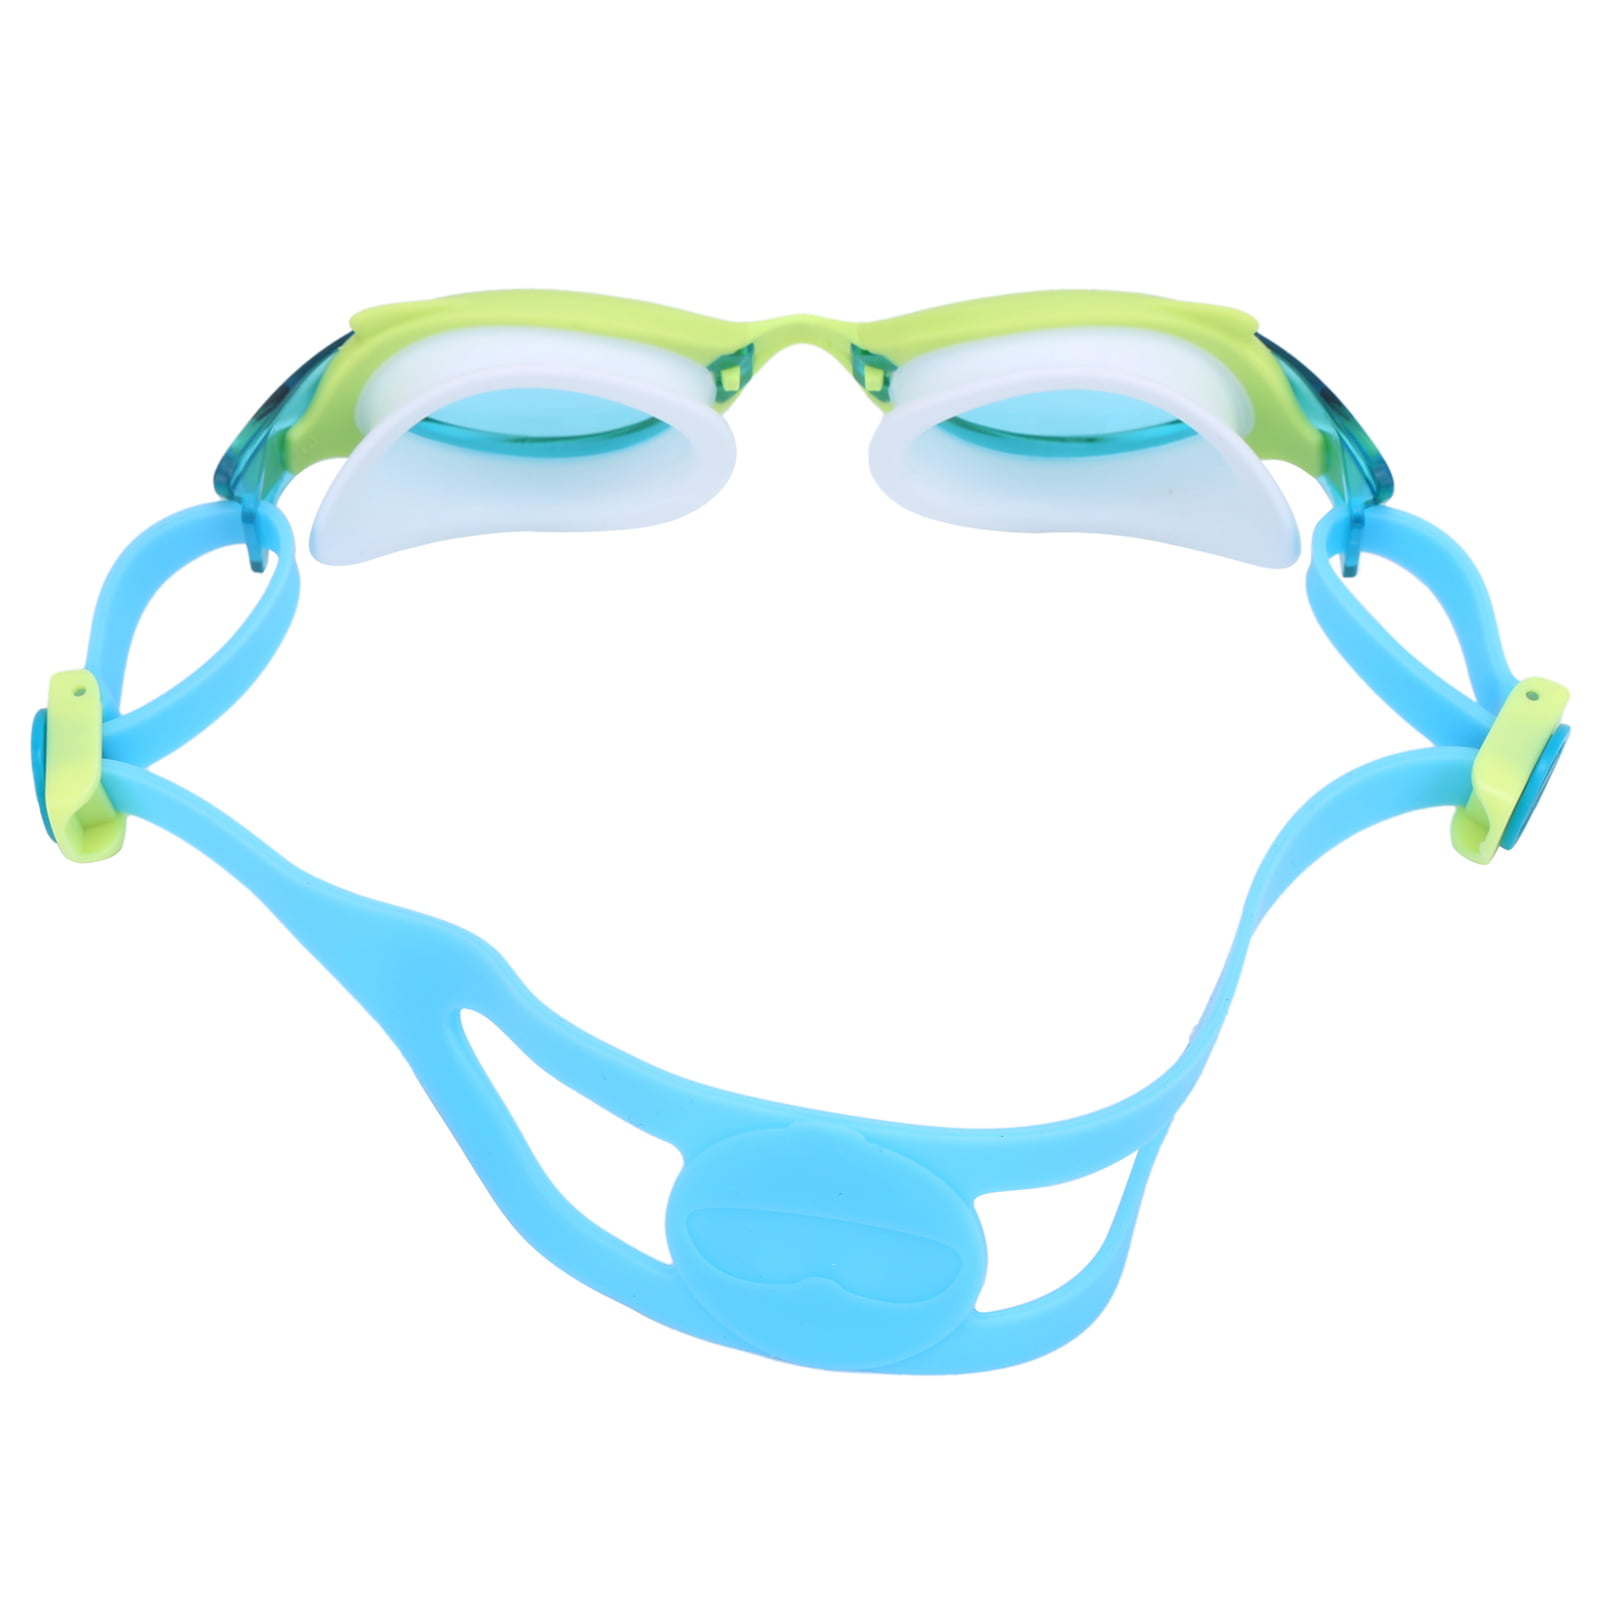 2x Kids Clear Comfortable Swimming Goggles Anti Fog No Leaking Swim Glasses 